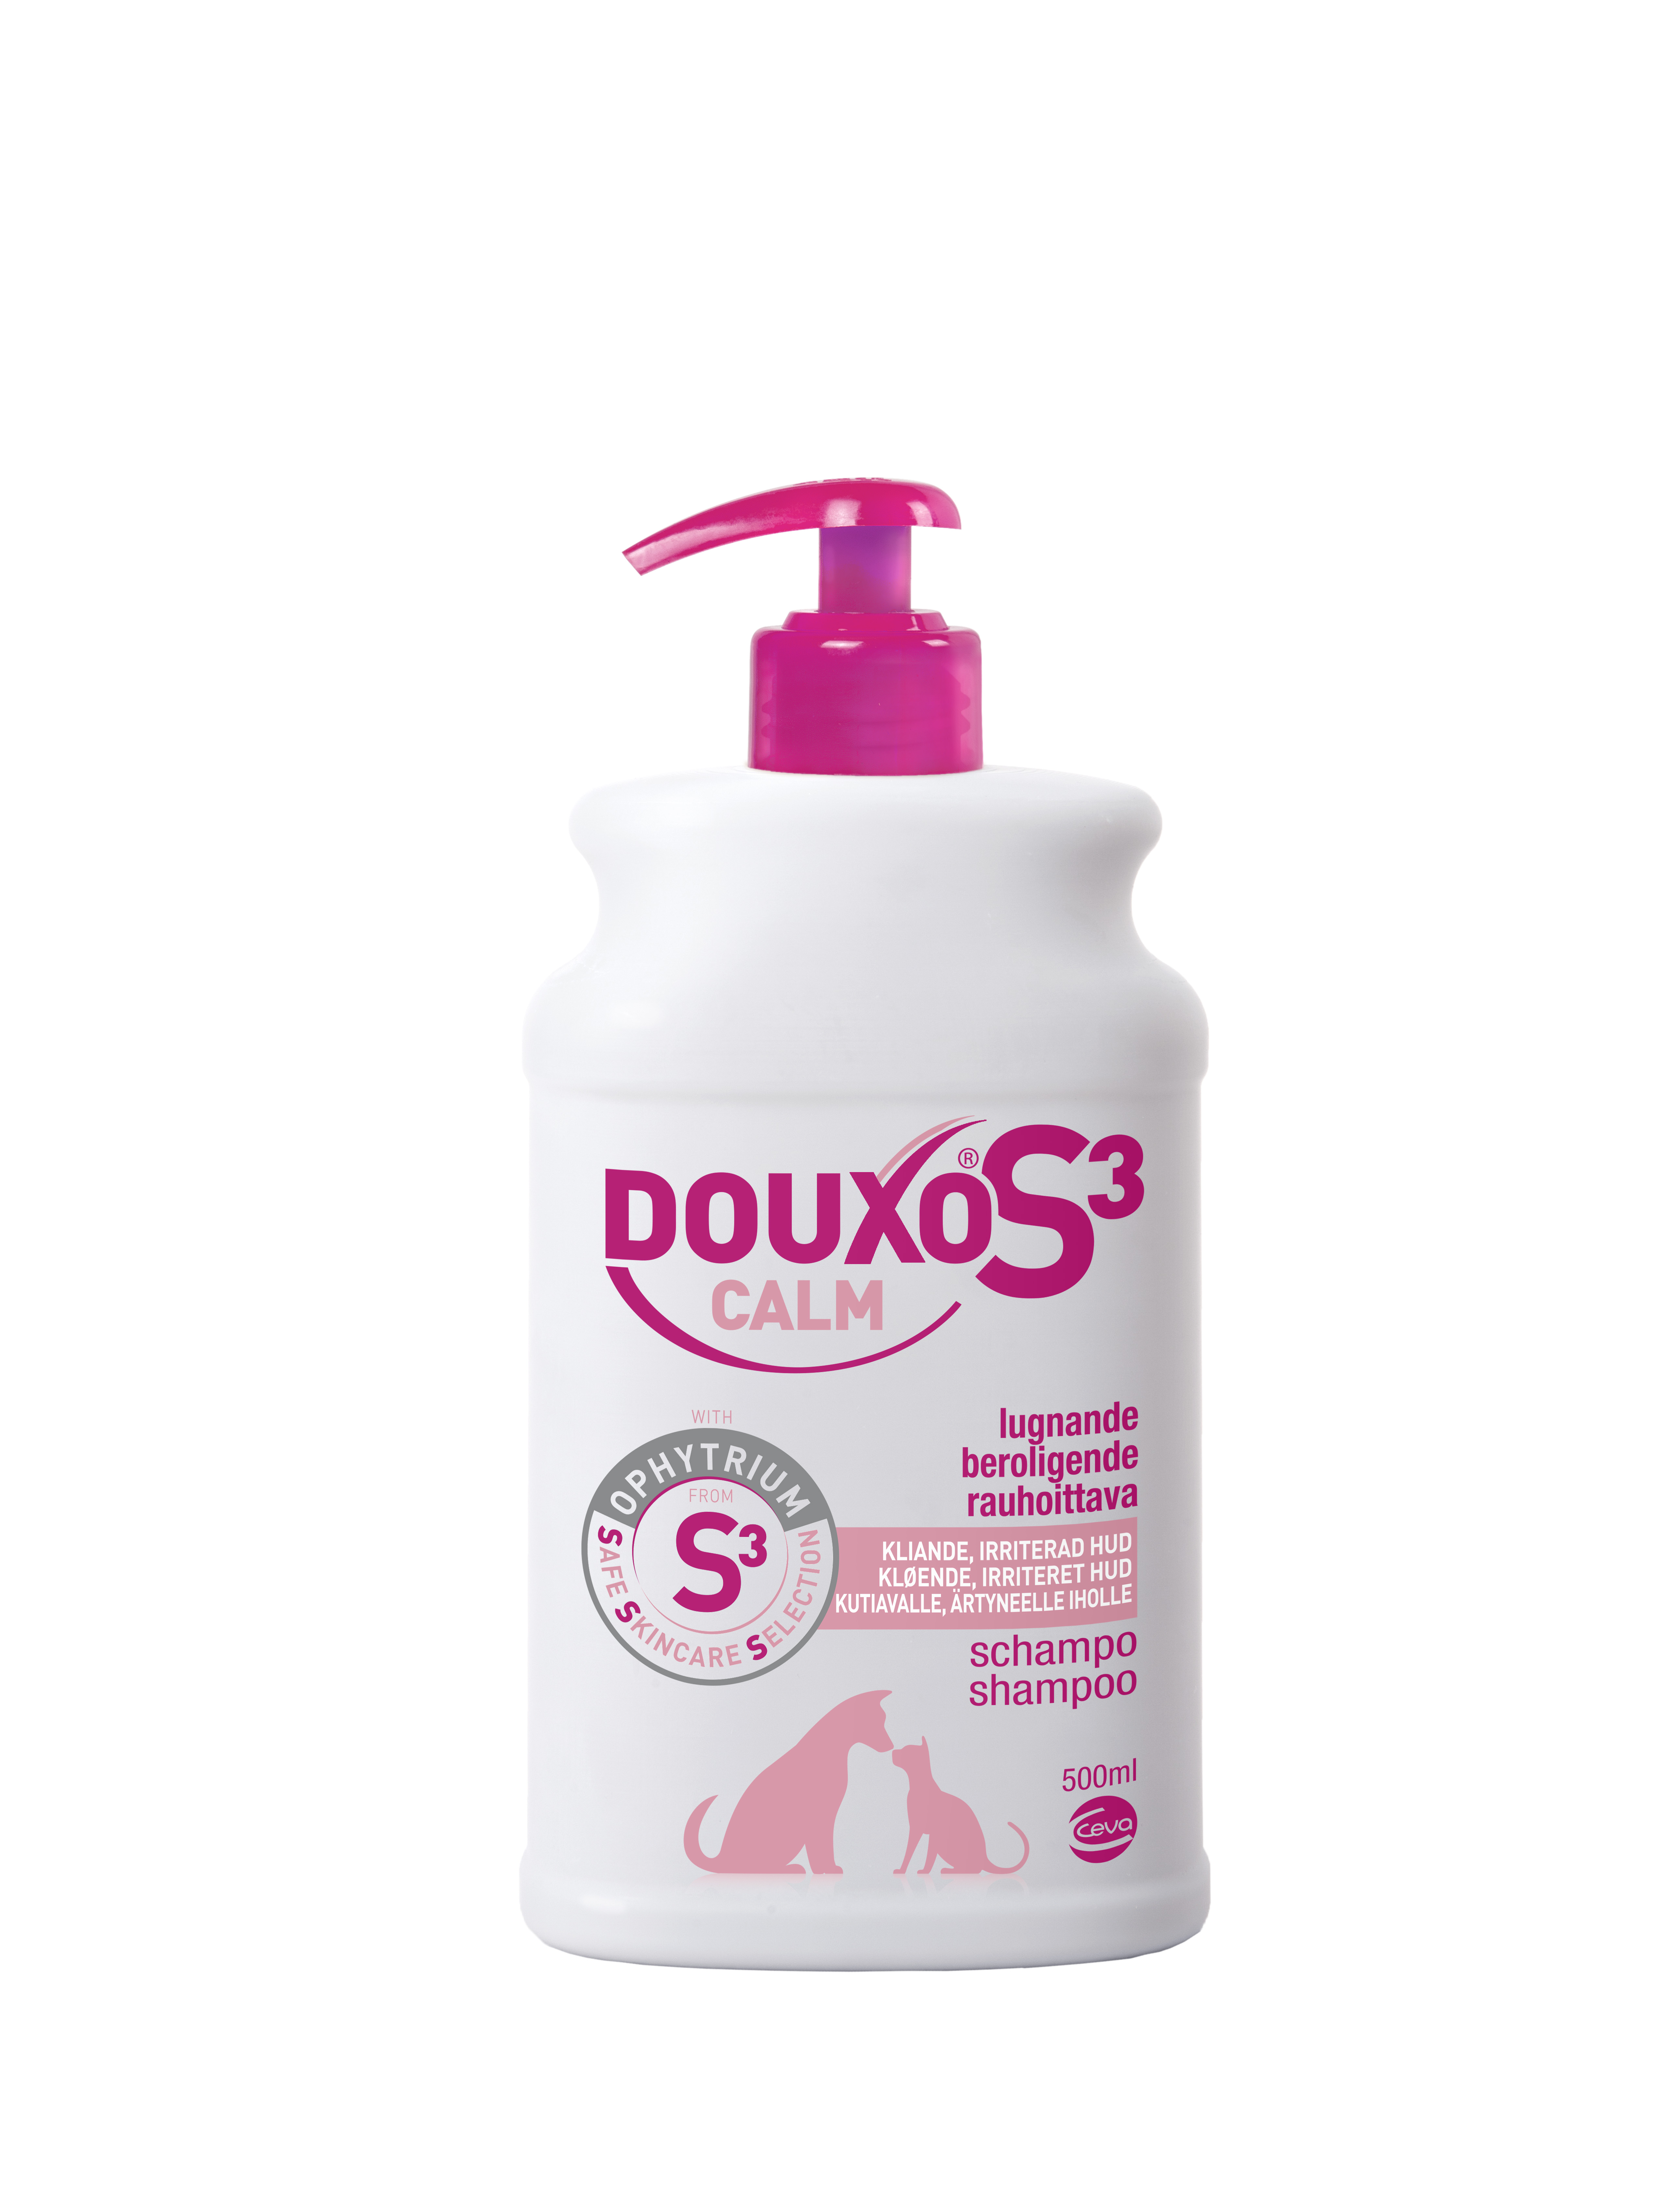 DOUXO S3 CALM Shampoo, 500 ml